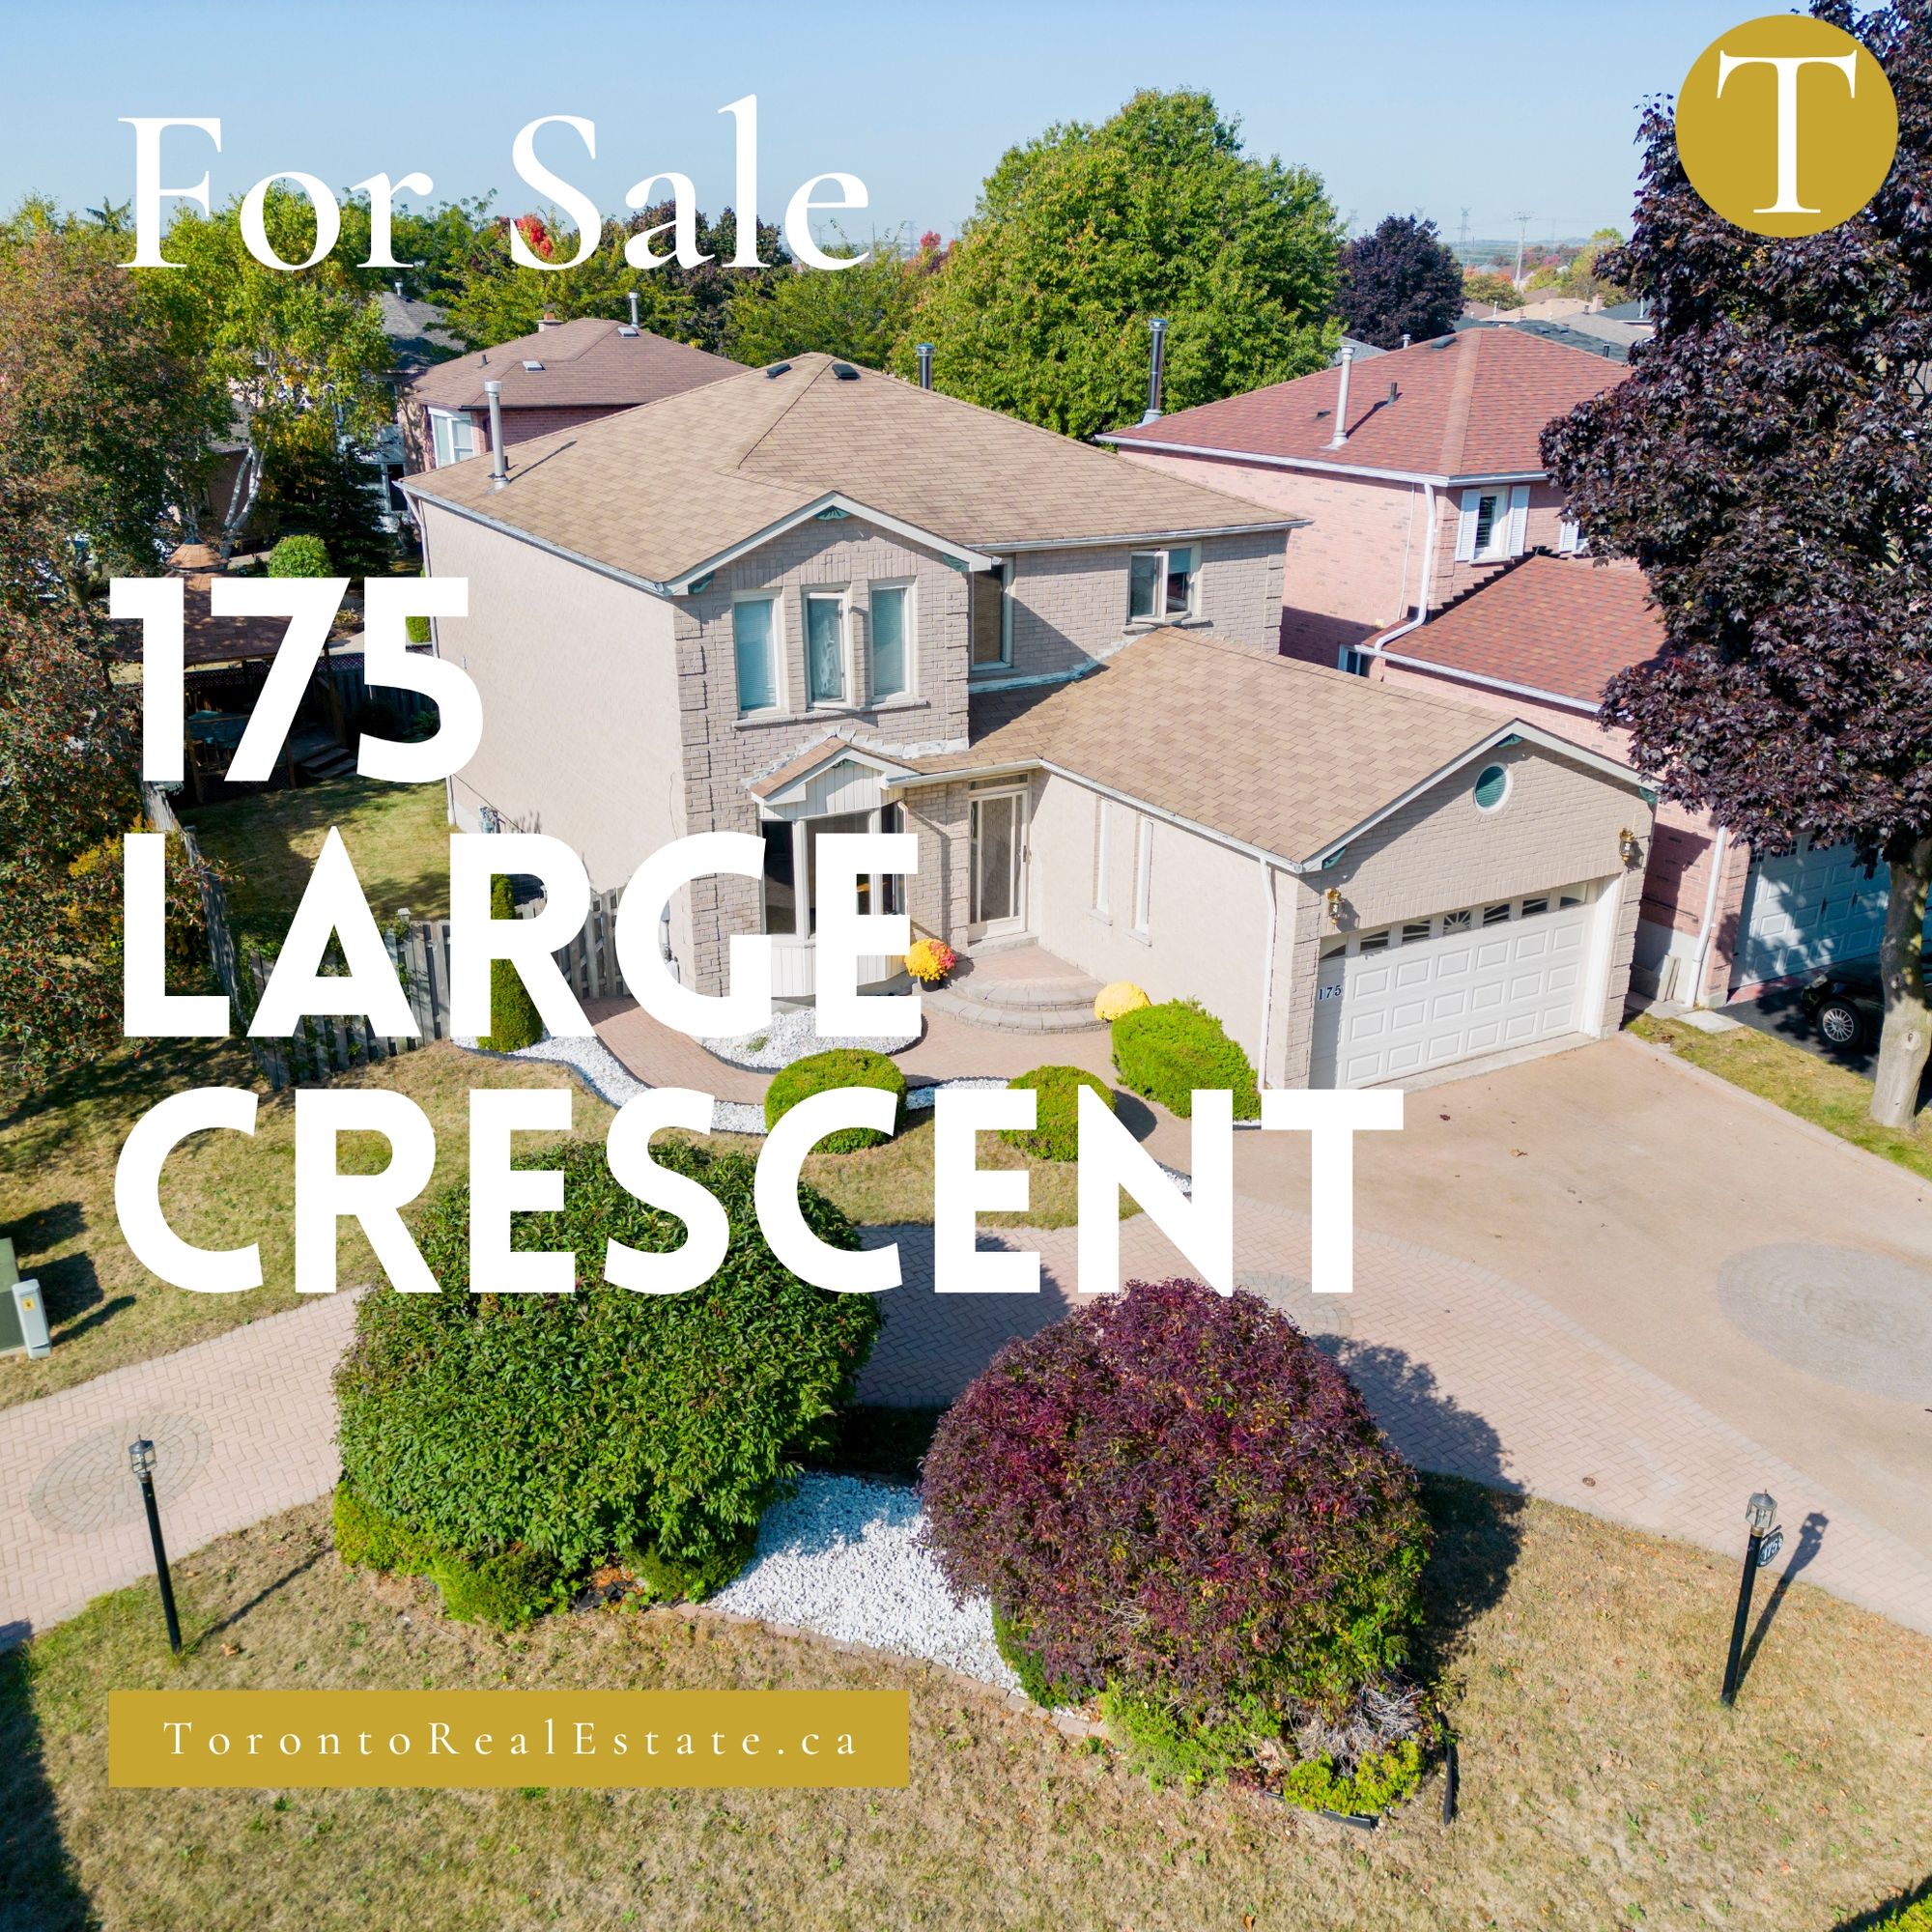 175 Large Crescent | SOLD!